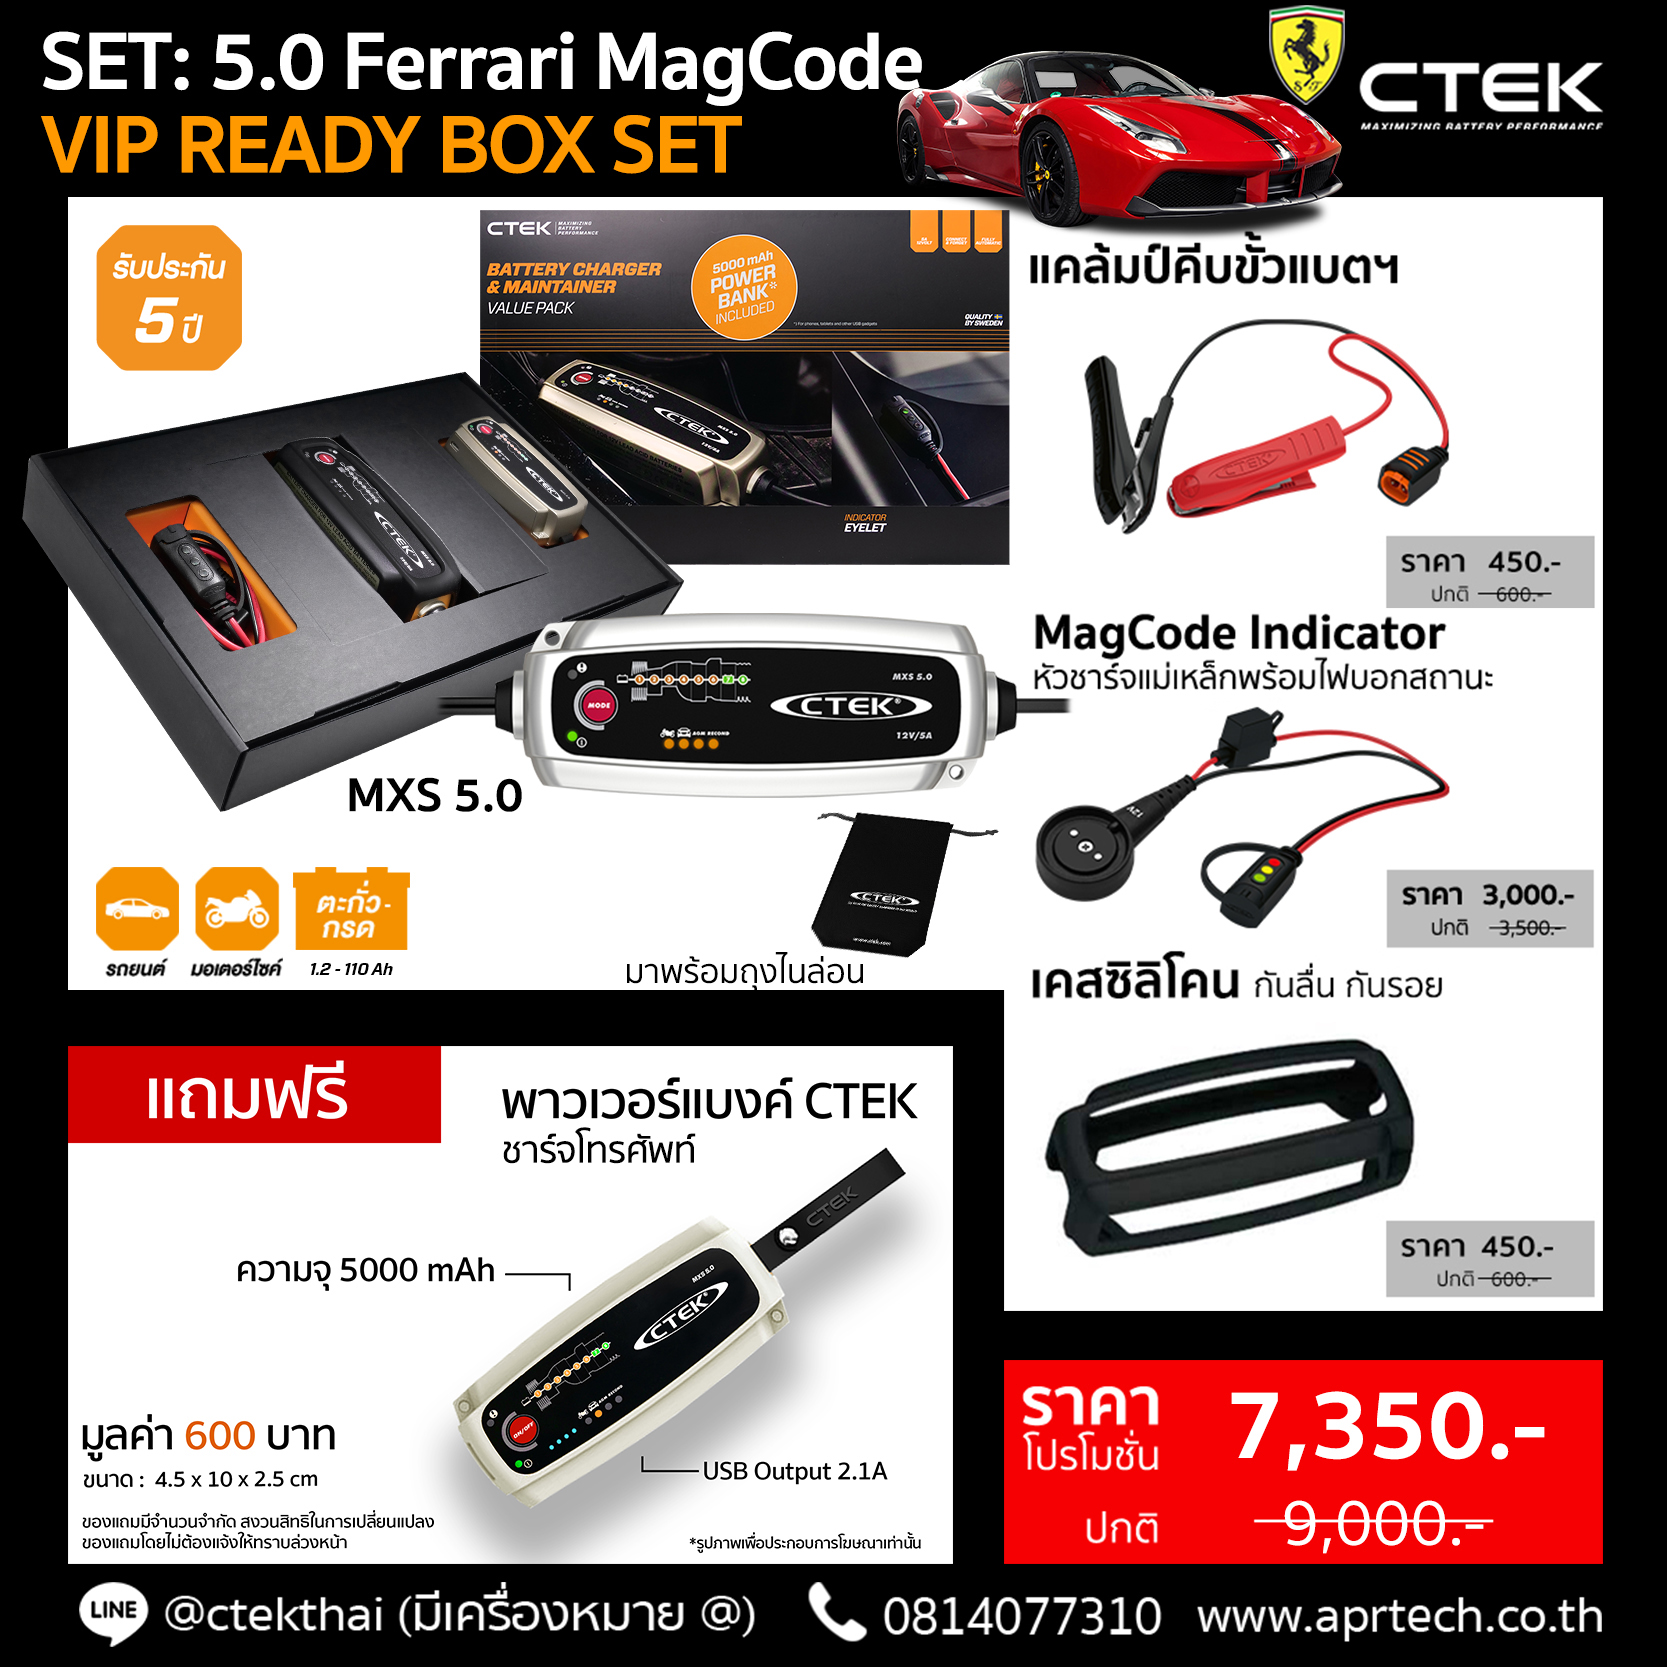 SET 5.0 Ferrari VIP READY BOX SET (MXS 5.0 + MagCode Indicator + Bumper)